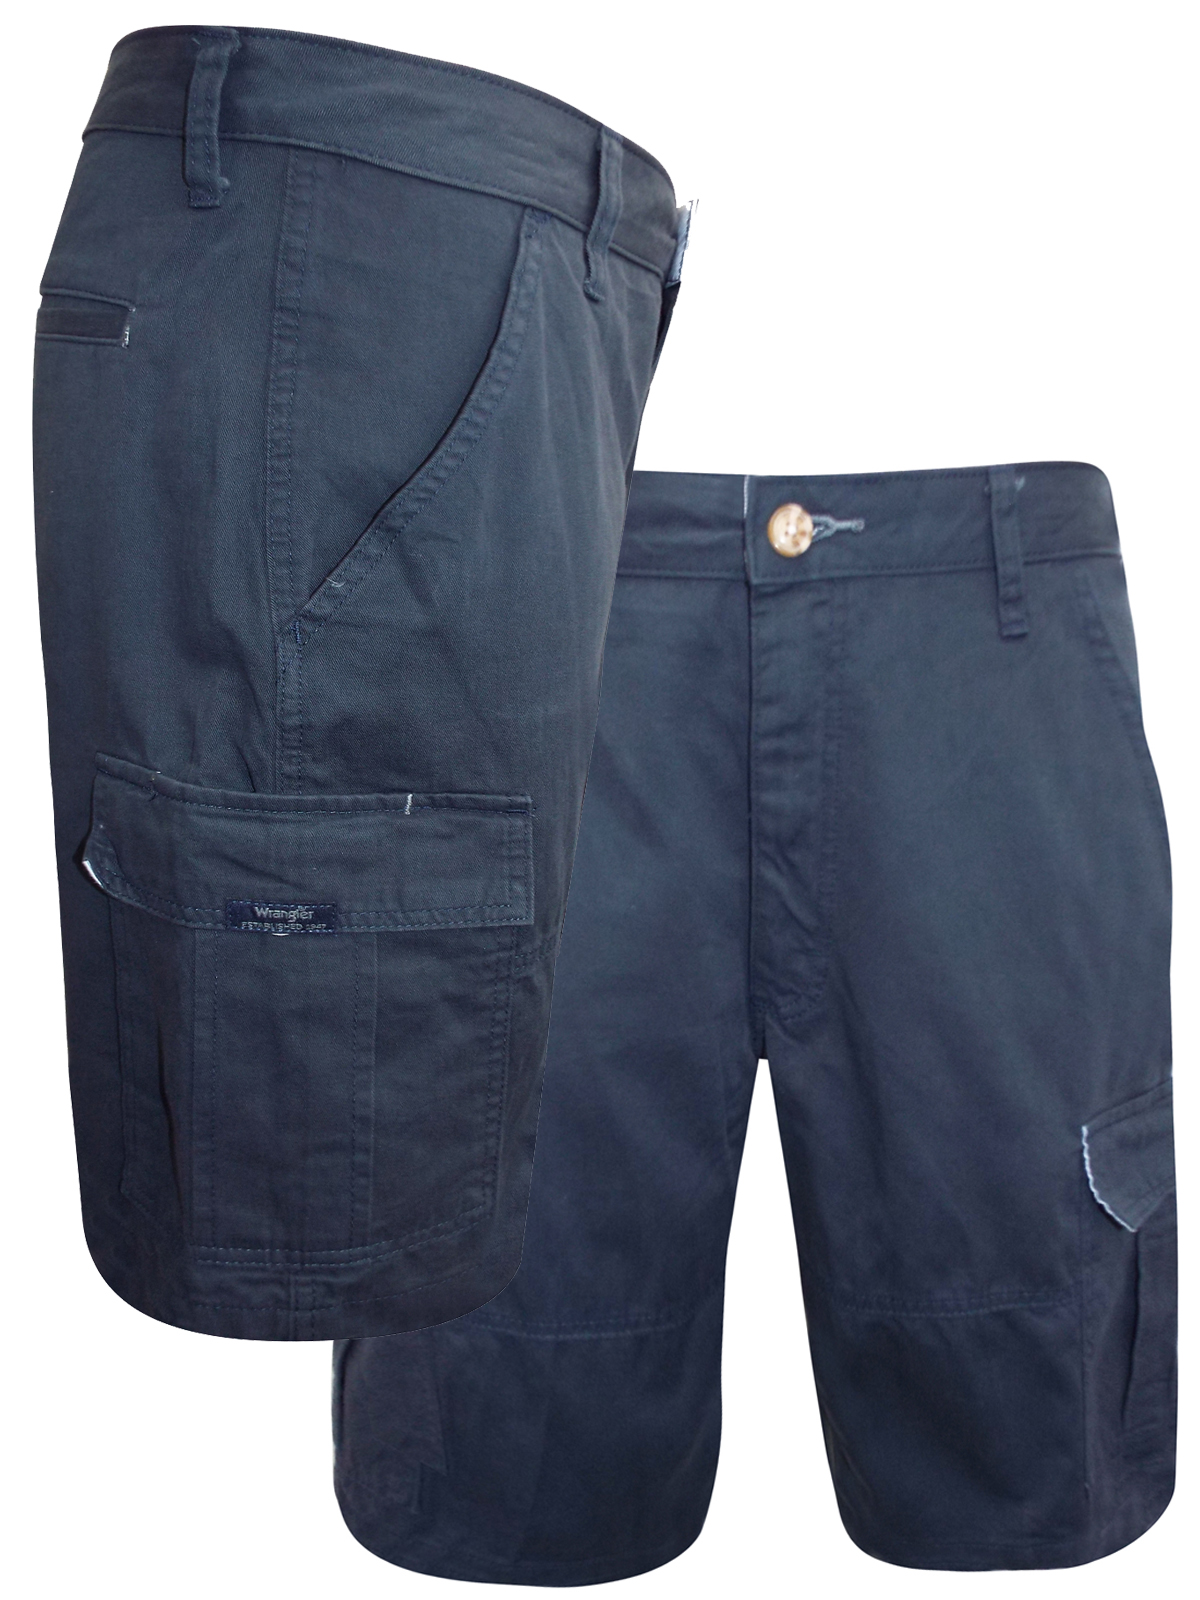 Wrangler - - Wr4ngler Mens NAVY Classic Twill Cargo Shorts - Waist Size